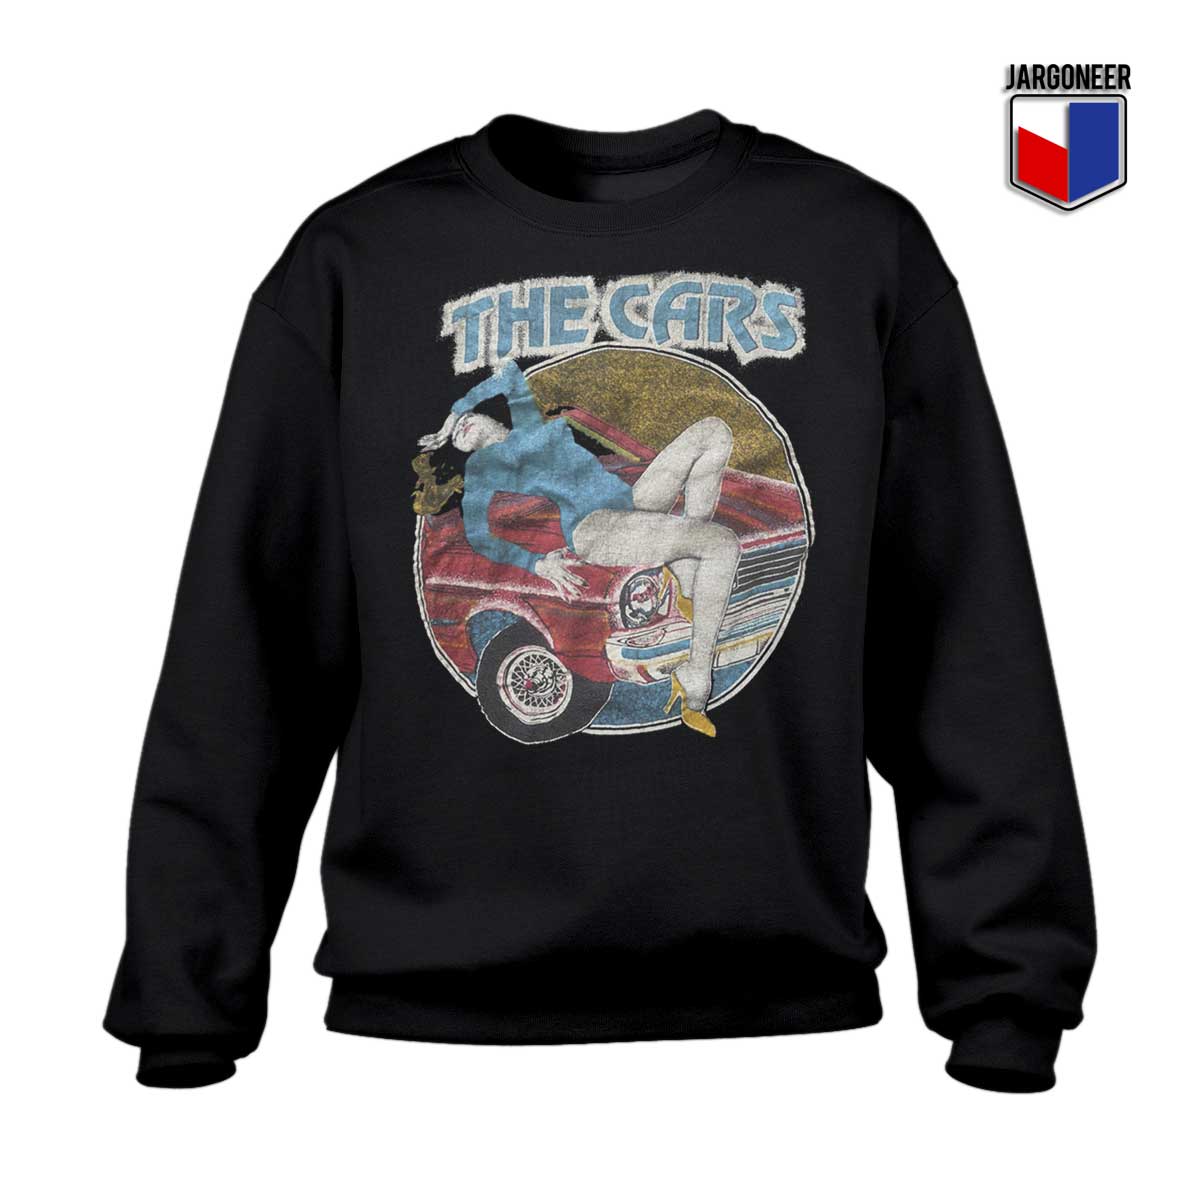 Vintage 70s The Cars band S Candy o New Wave Punk Sweatshirt - Shop Unique Graphic Cool Shirt Designs